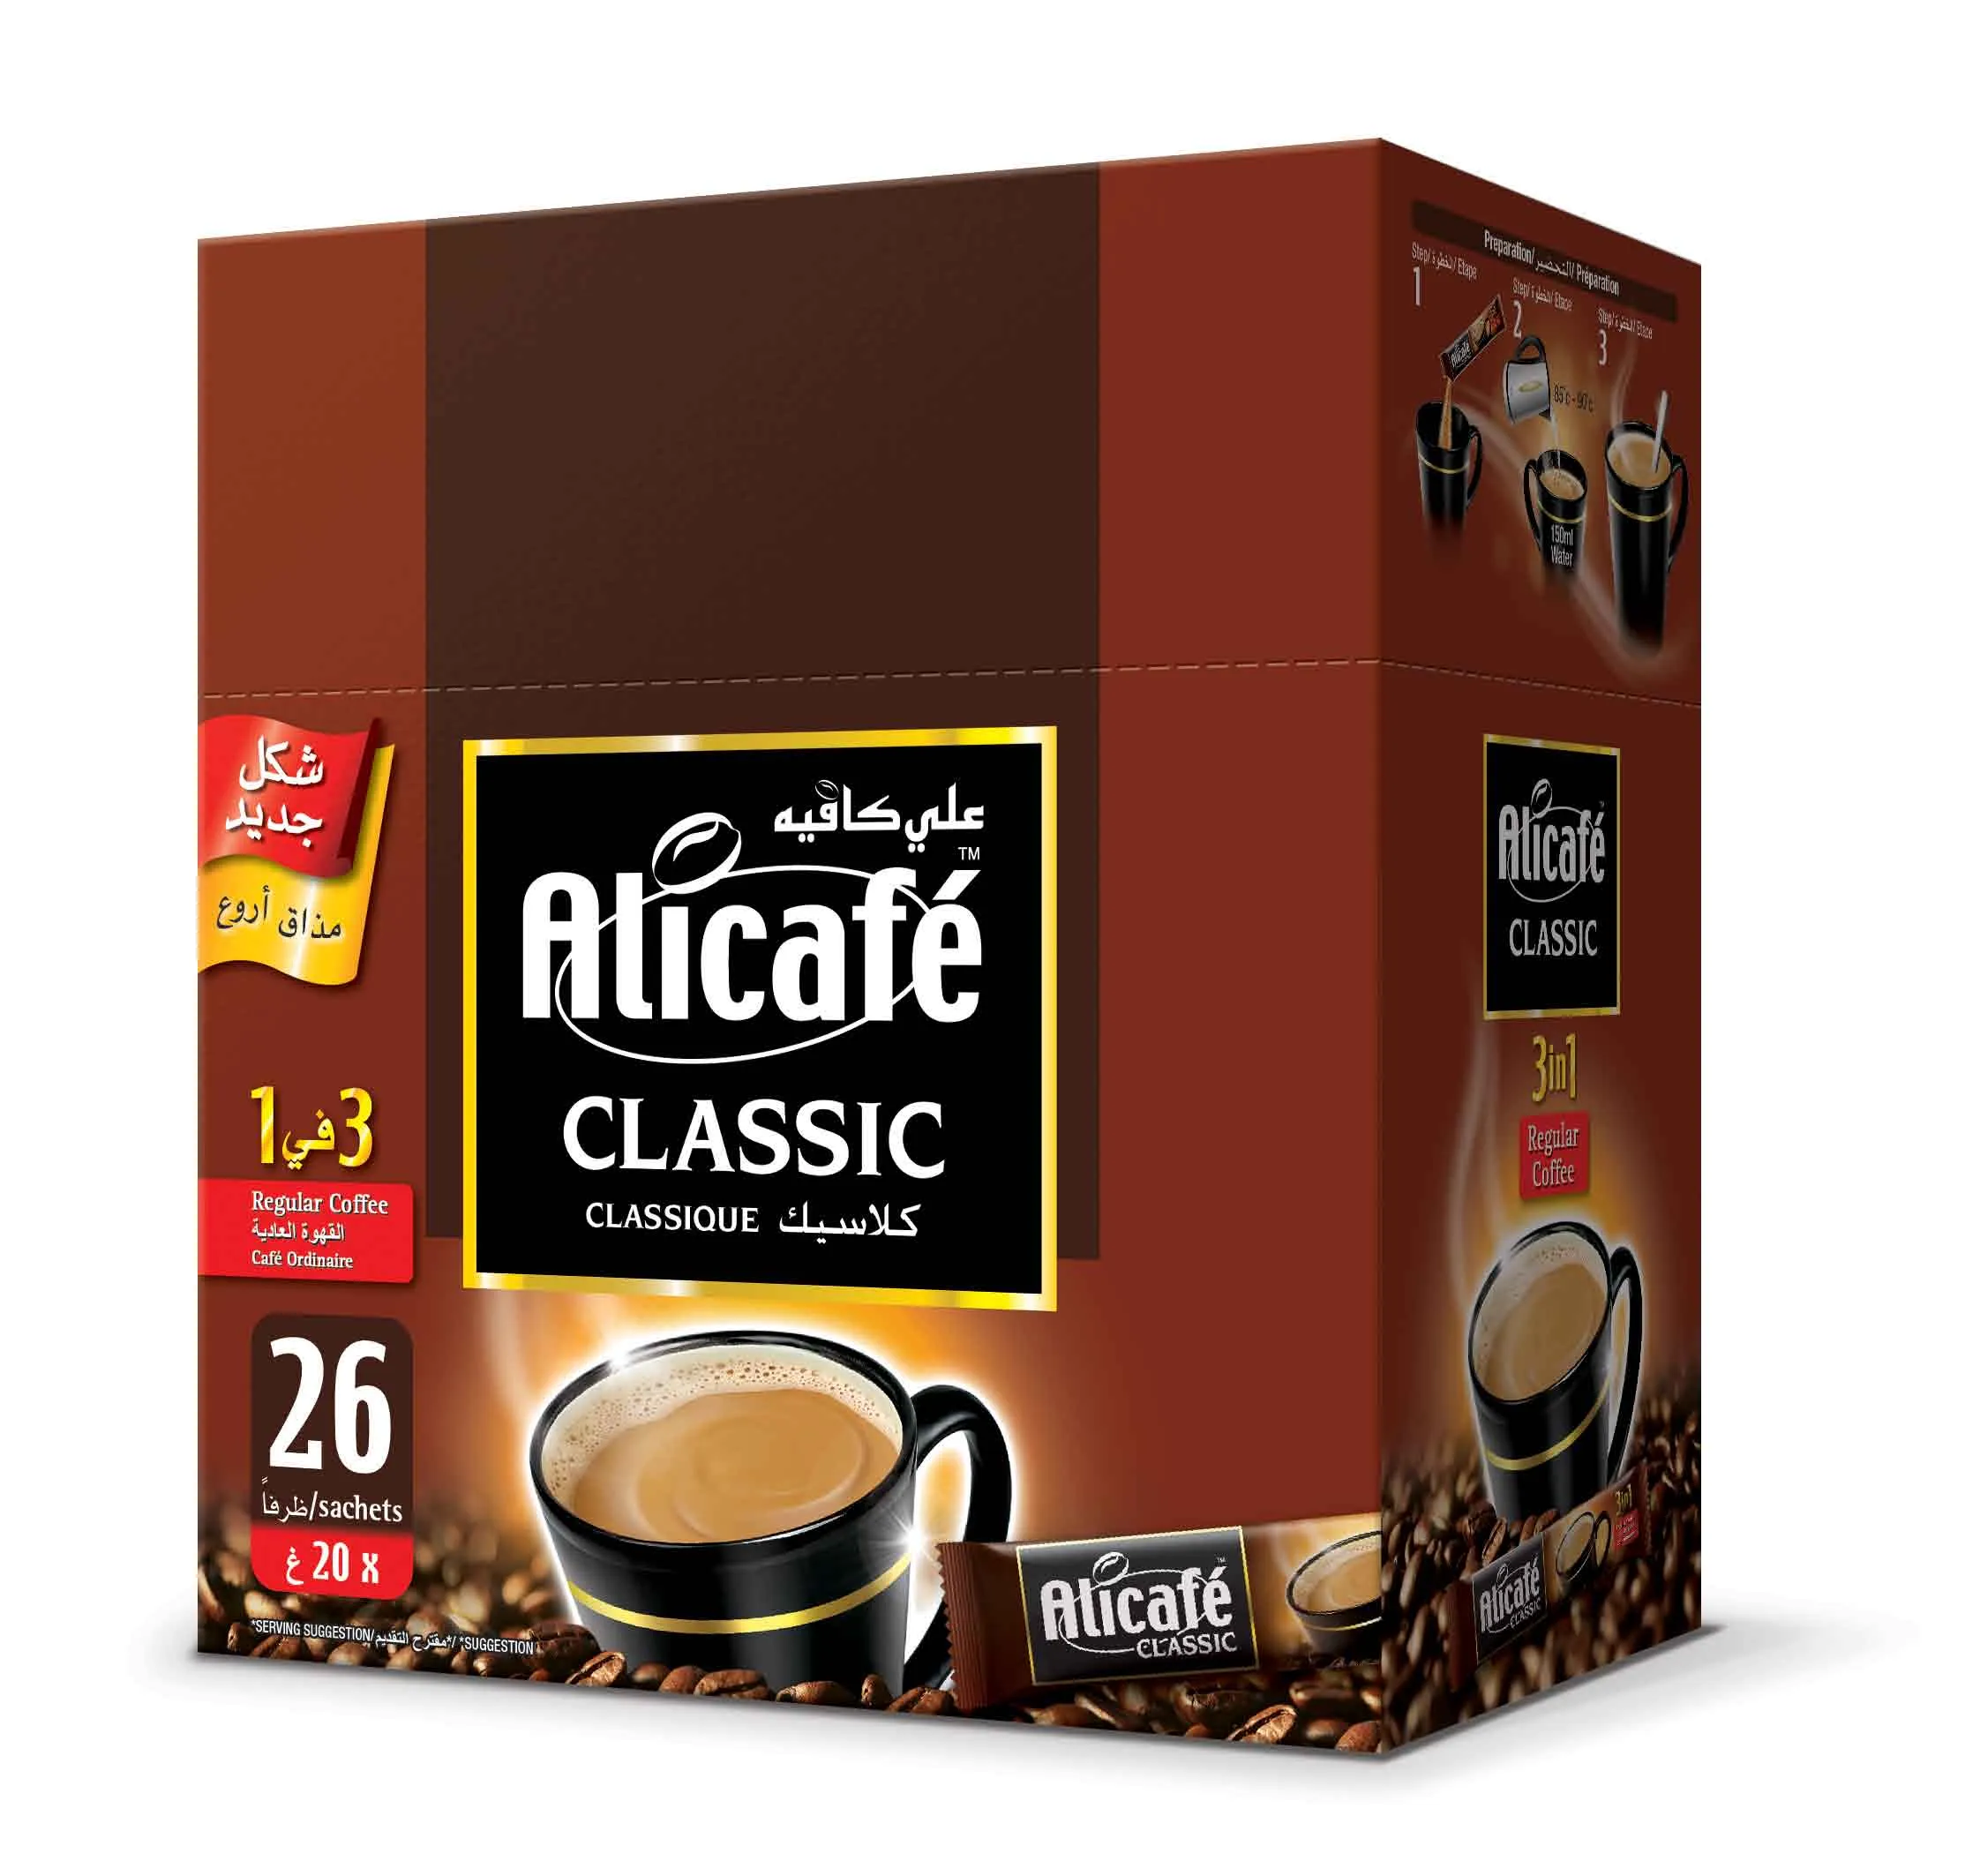 ALICAFE CLASSIC 3 IN 1 BOX